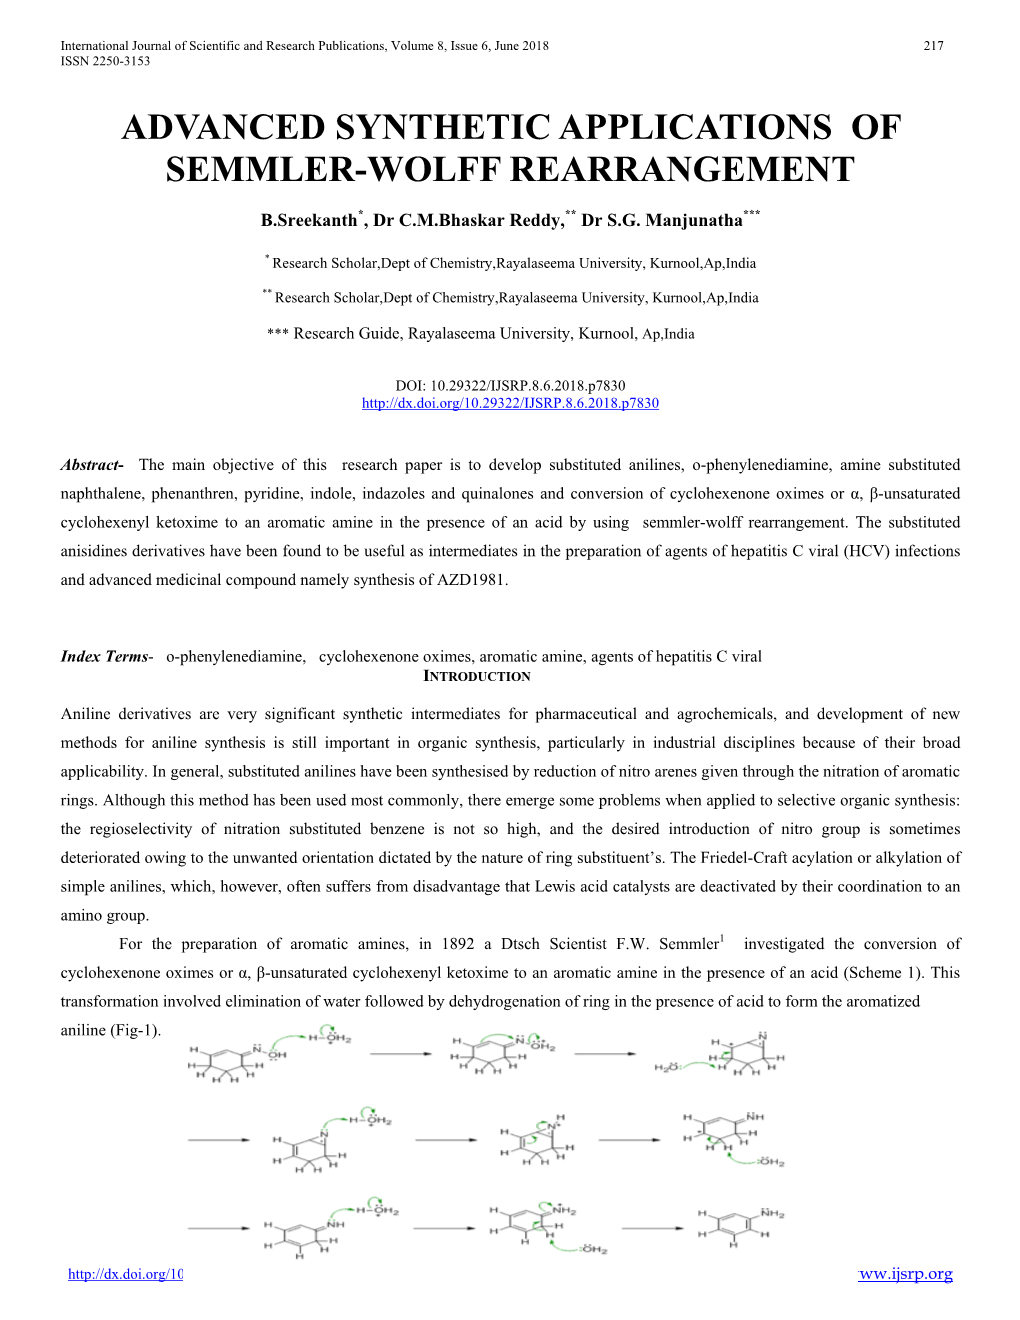 Advanced Synthetic Applications of Semmler-Wolff Rearrangement